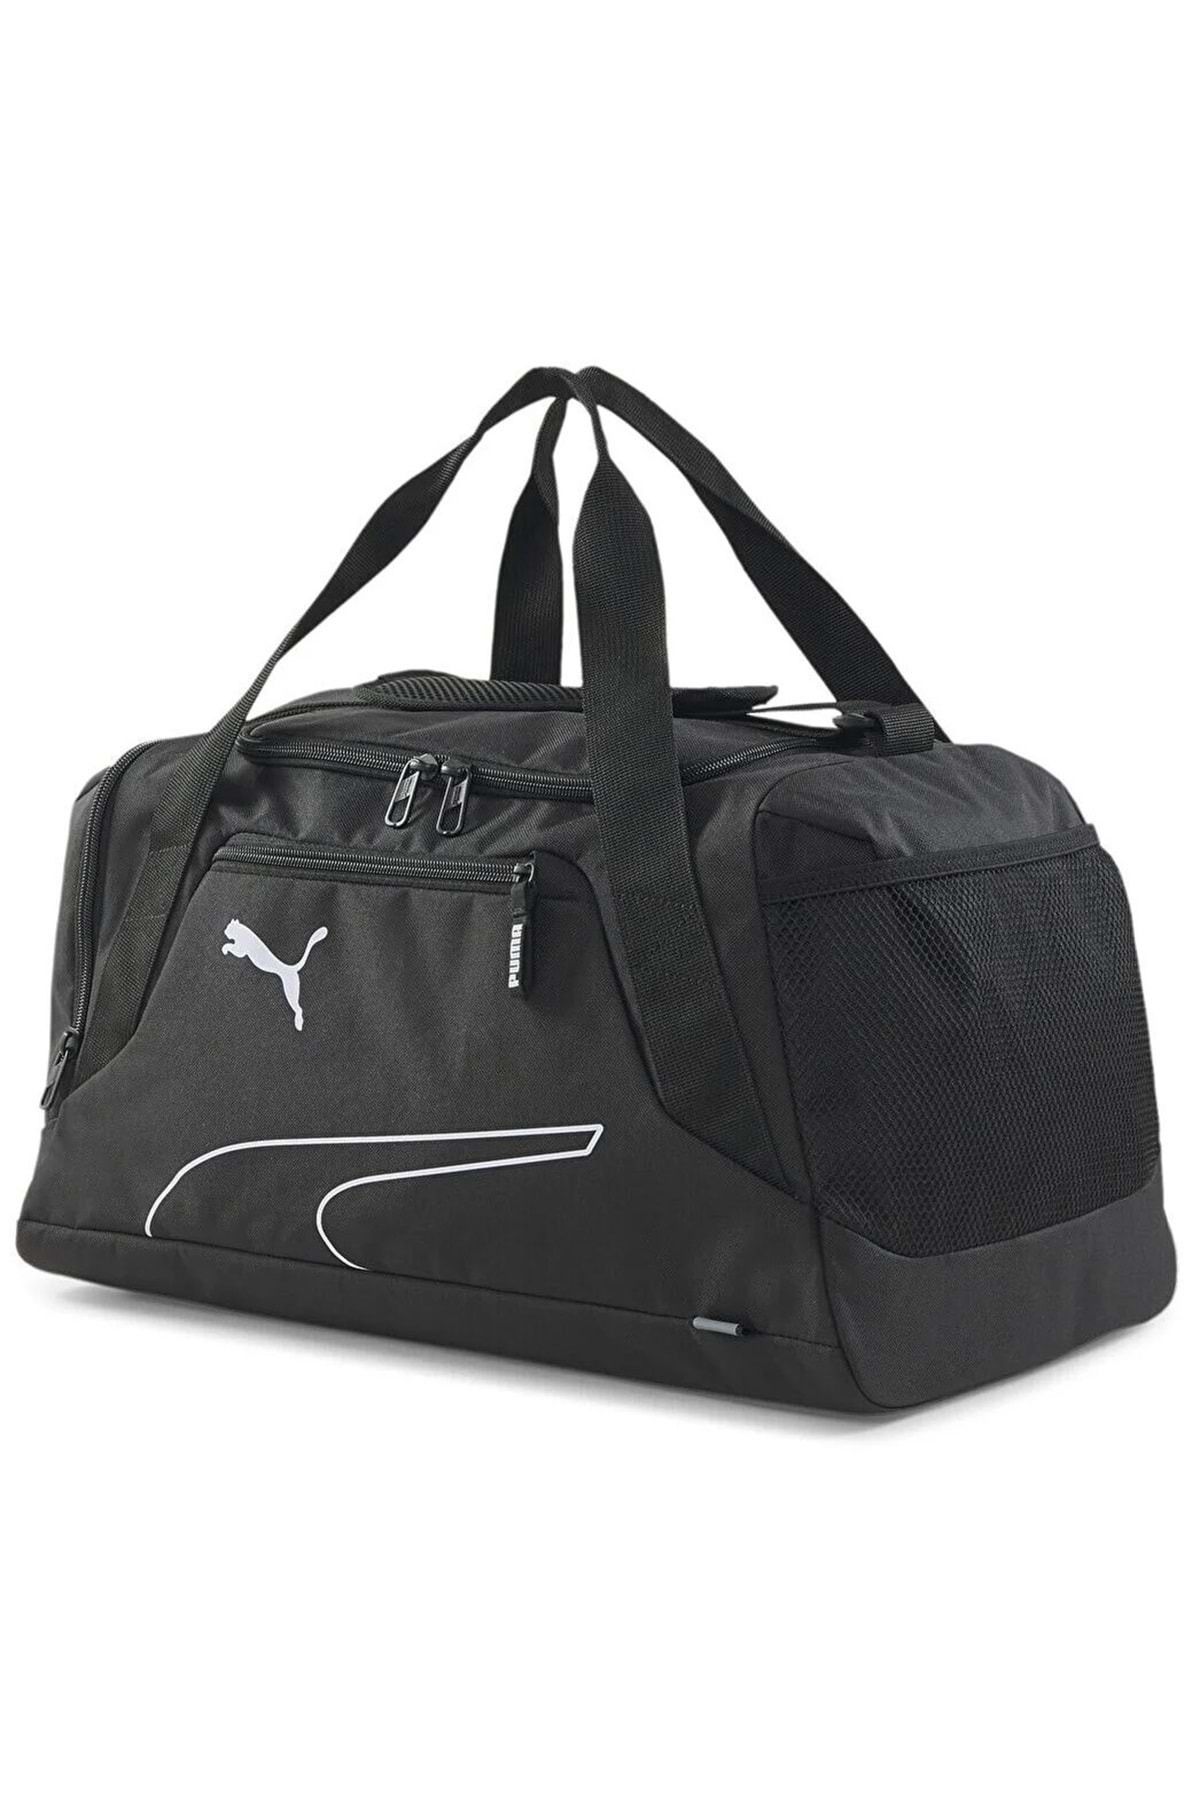 Puma 079230- Fundamentals Sports Bag S Unisex Spor Çanta Si?yah